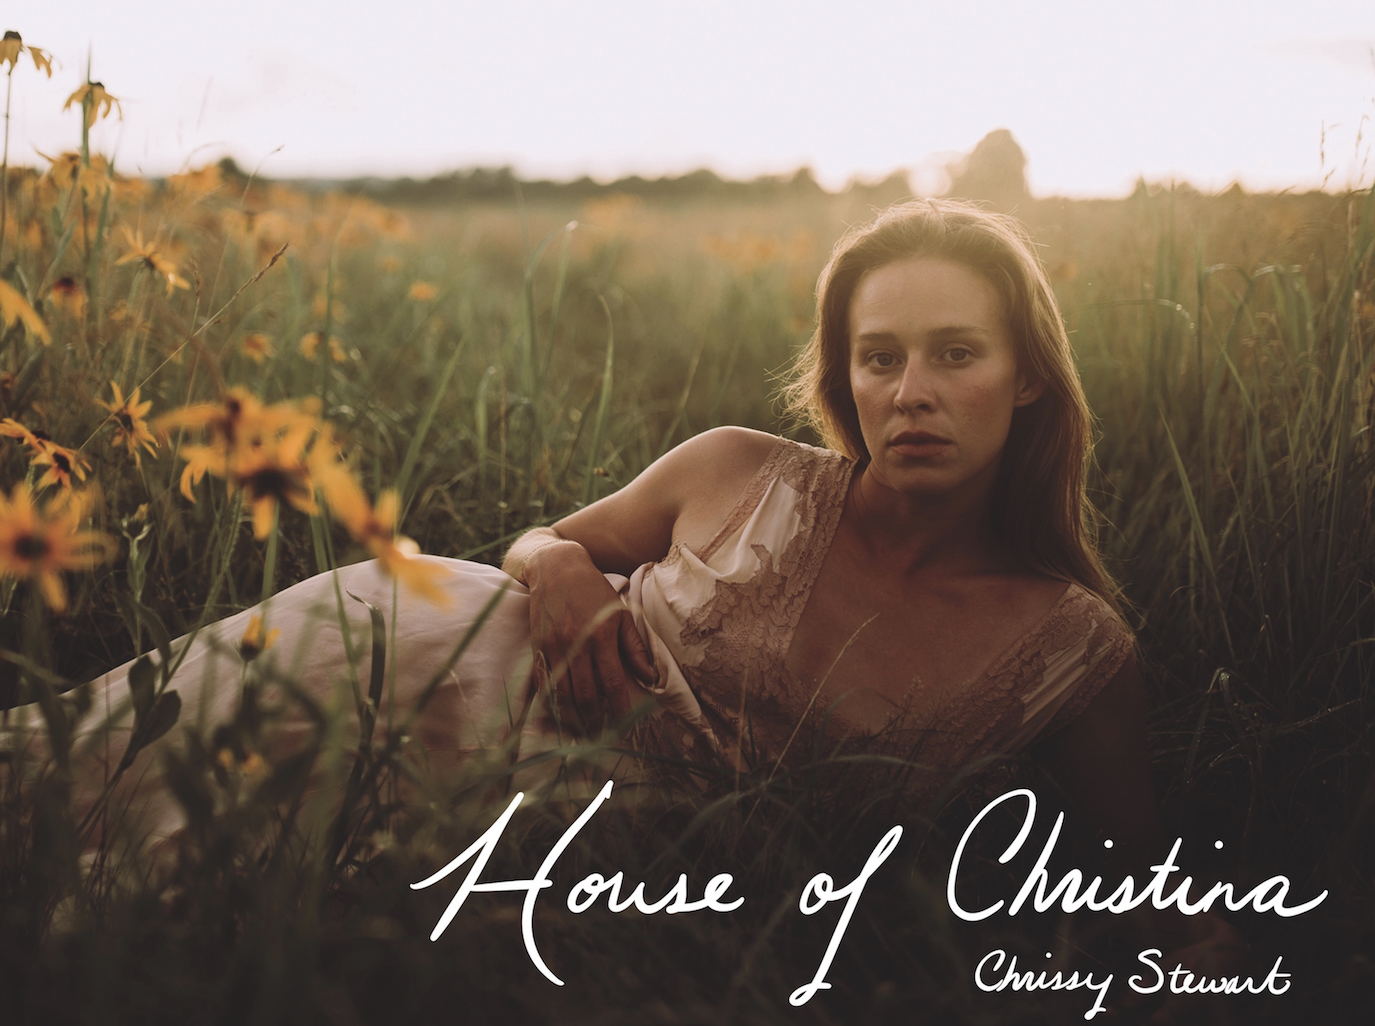 Album of the Week | Chrissy Stewart - House of Christina